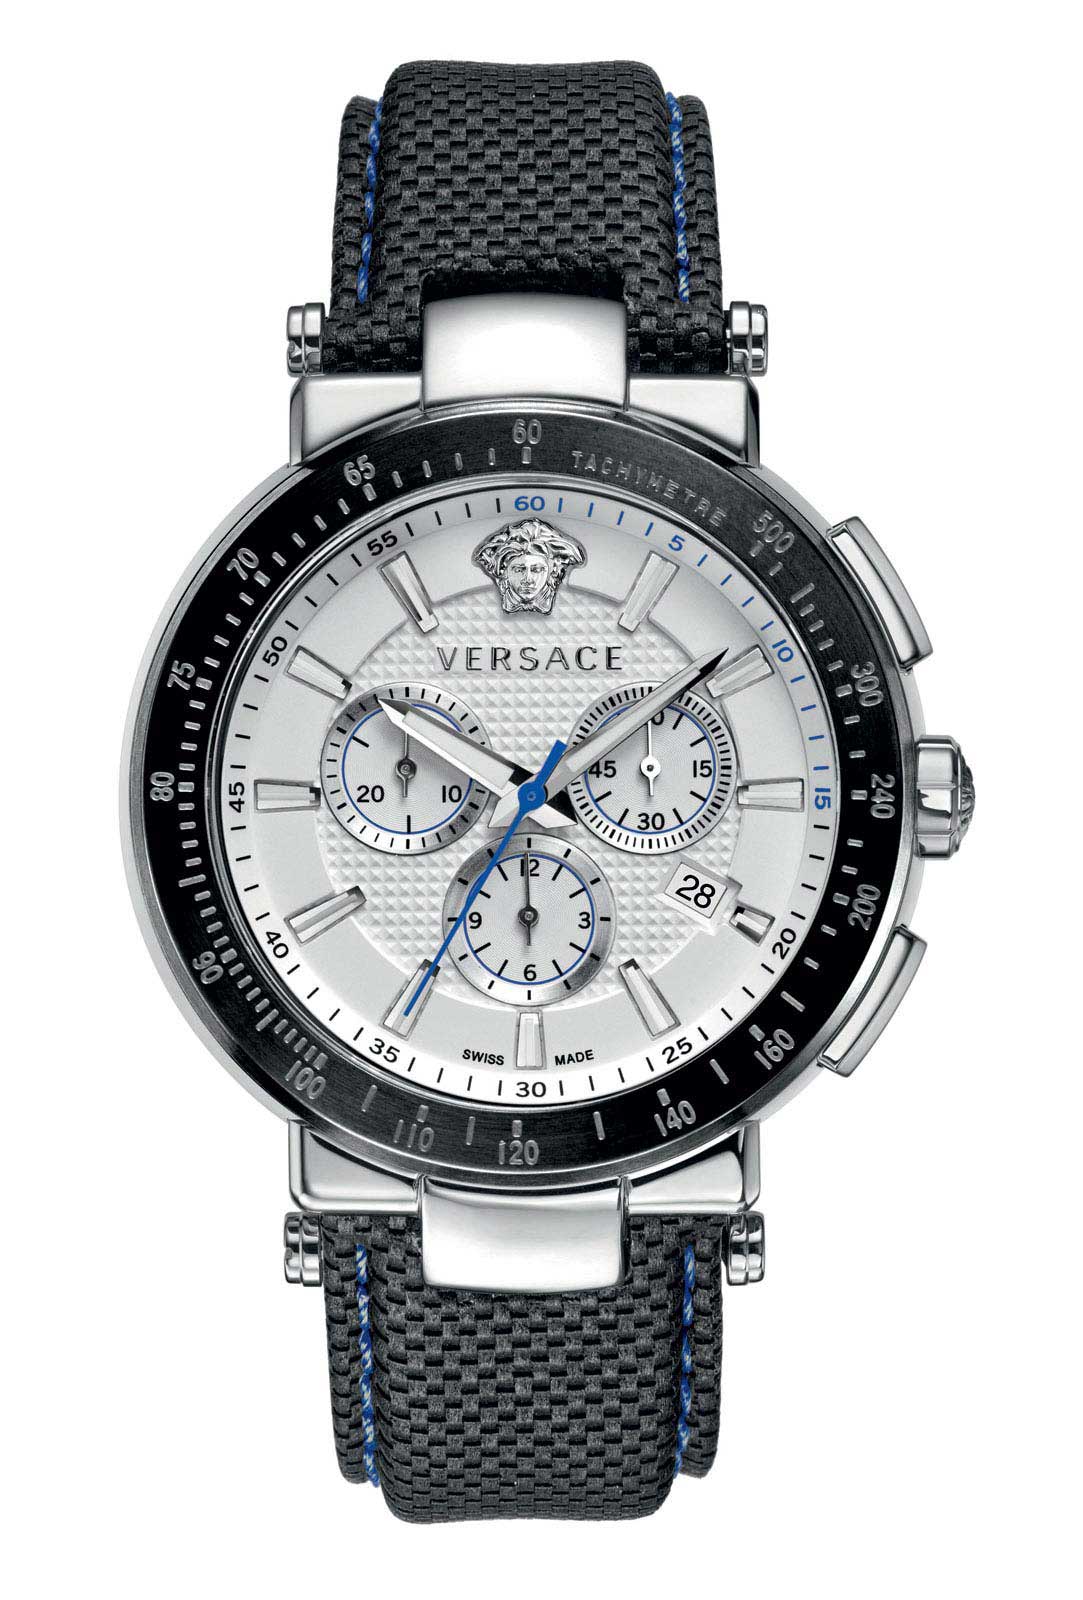 Versace QUARTZ CHRONO watch 5030D STEEL WHITE